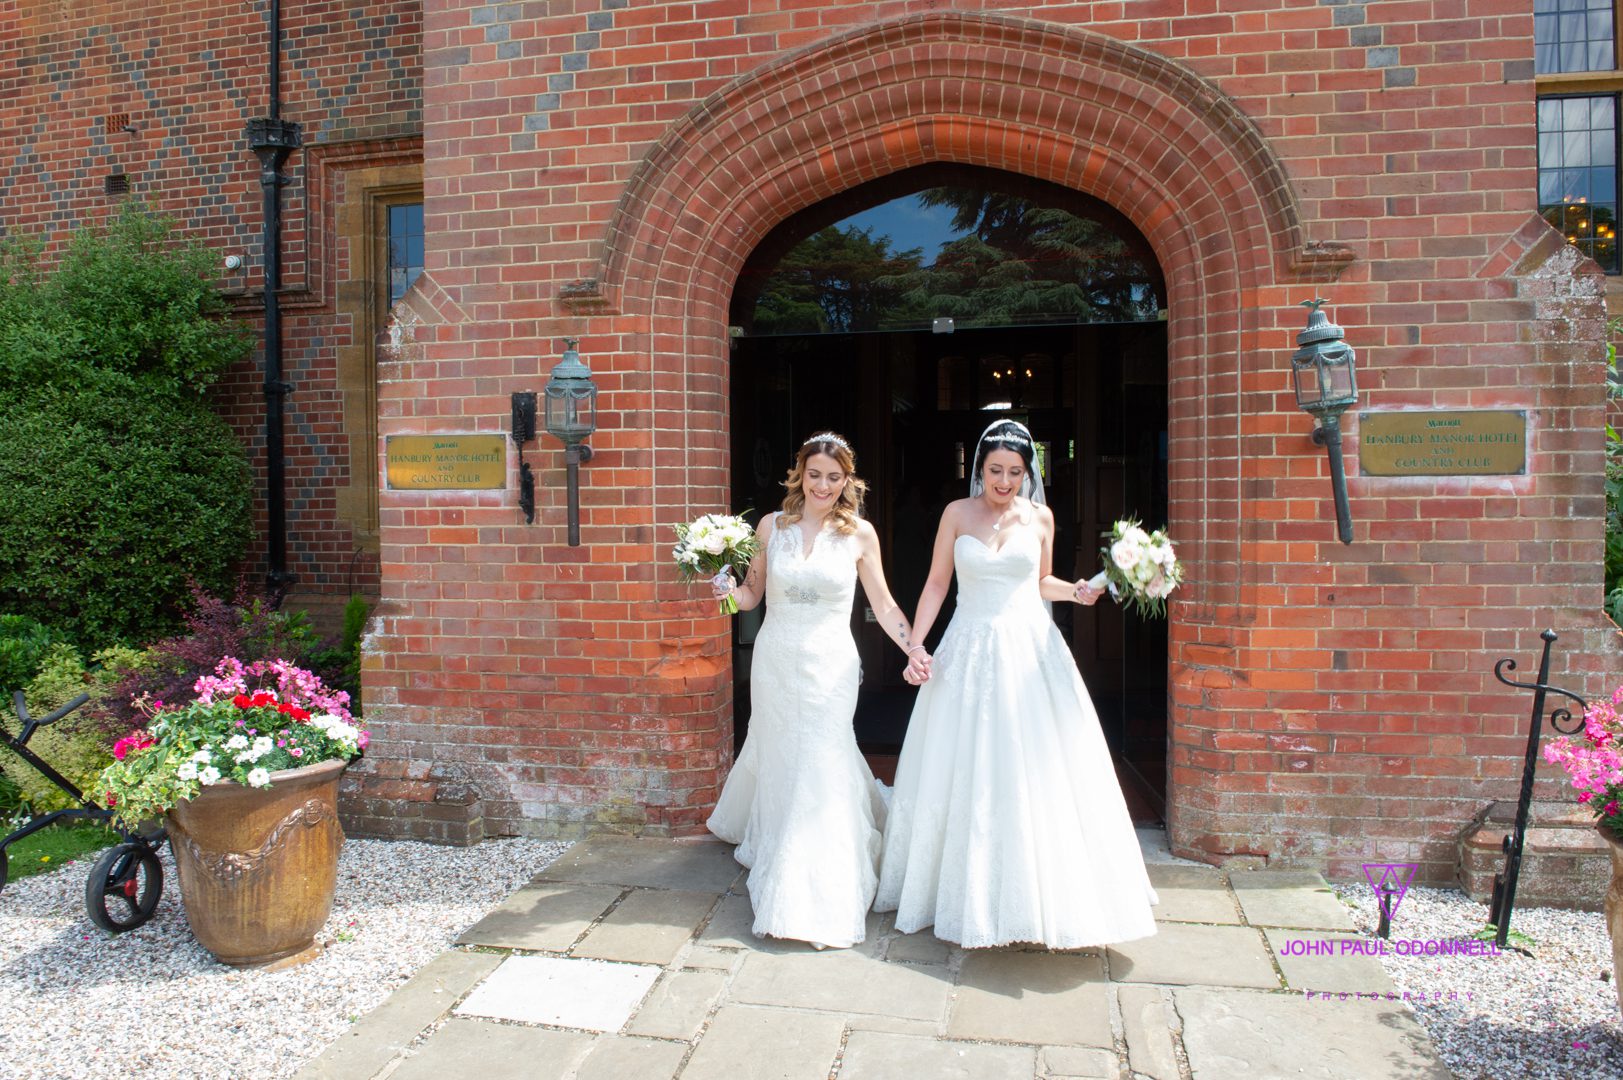 Danielle and Emilys wedding at Hanbury Manor